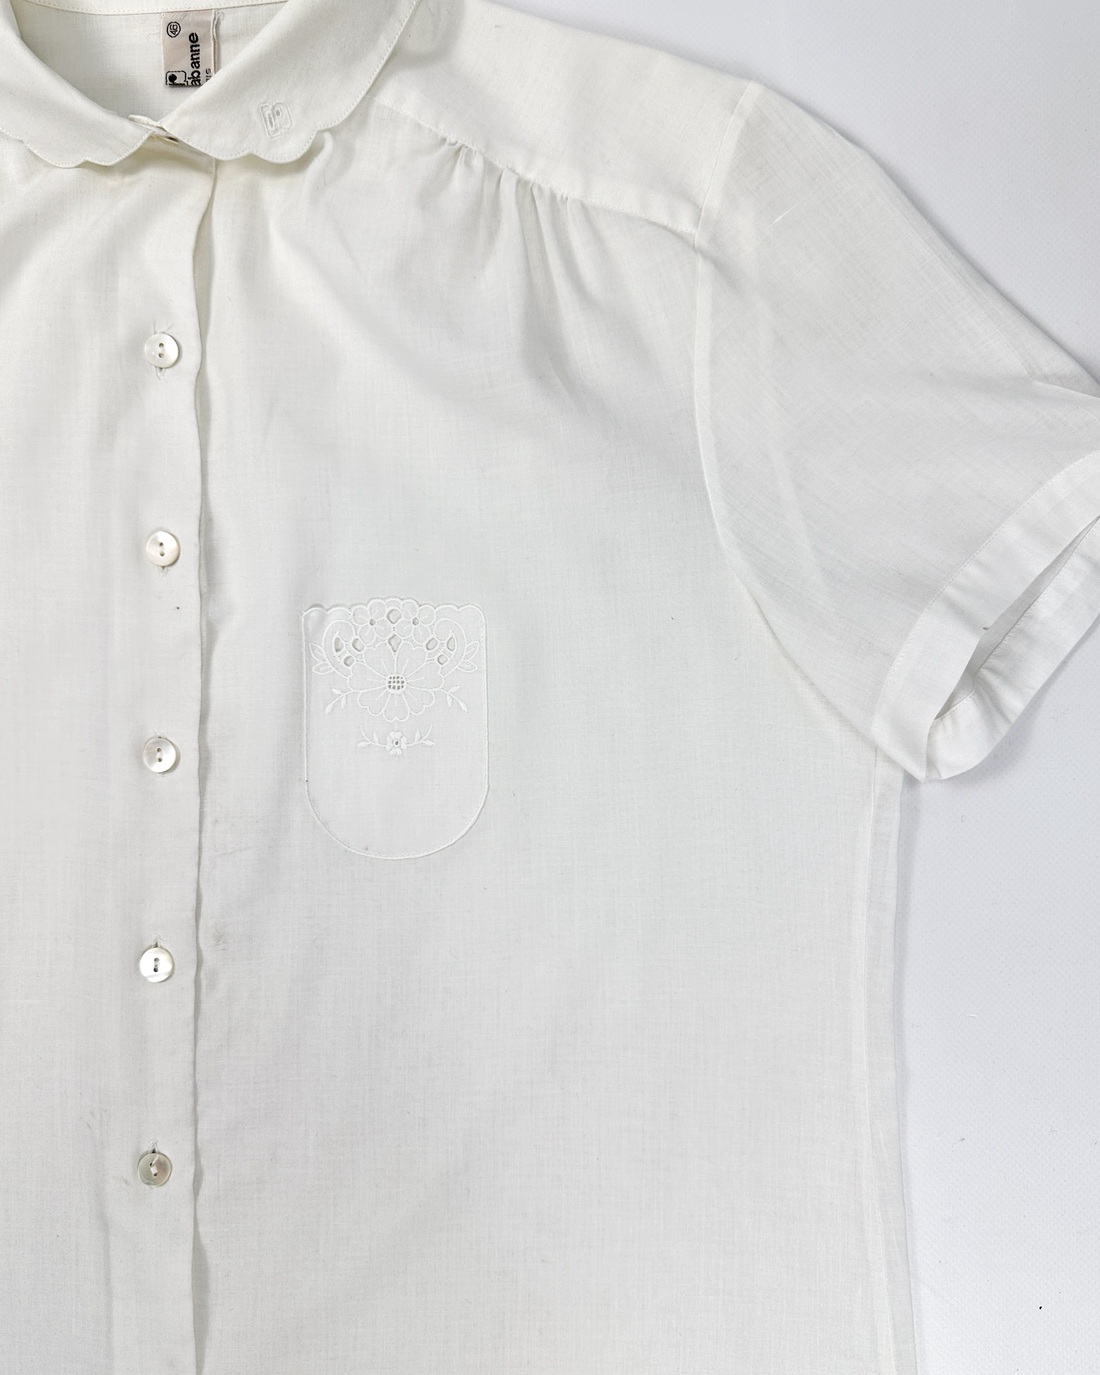 Paco Rabanne White Detailed Shirt 1980's